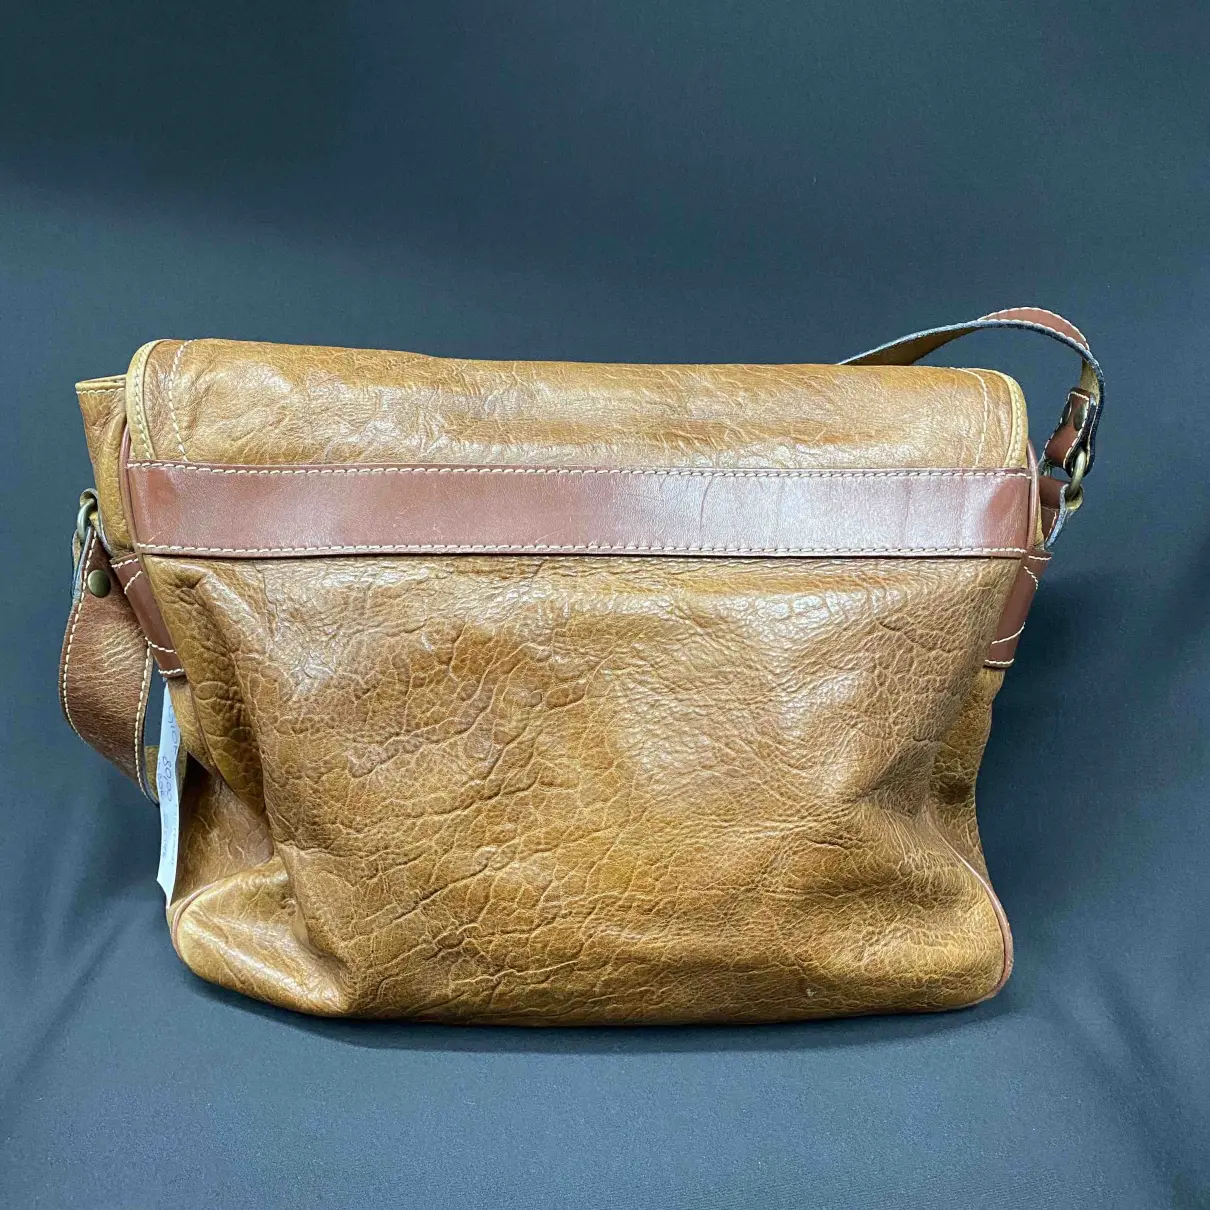 Buy Giorgio Armani Leather bag online